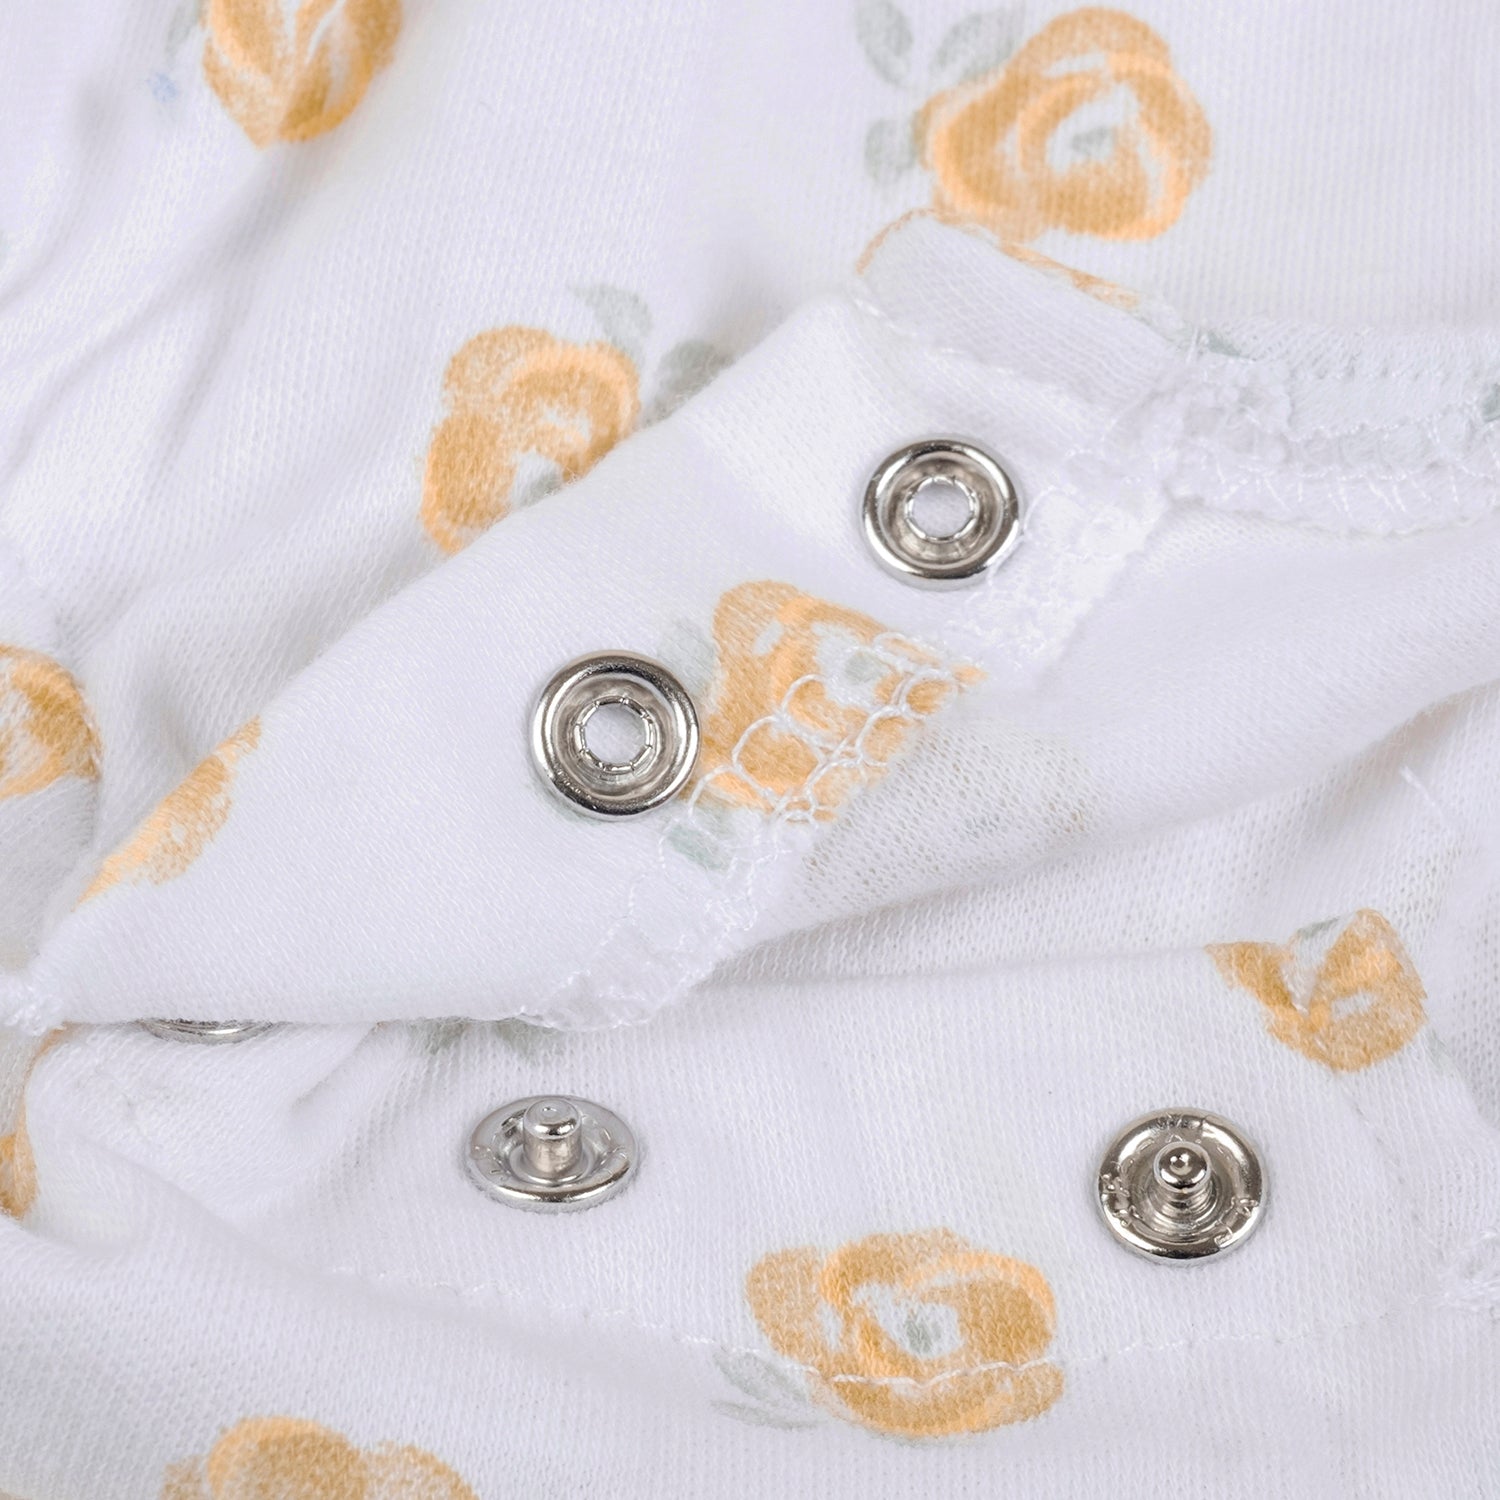 Baby Moo Rose Gift Set 3 Piece With Bodysuit, Socks And Headband - Yellow